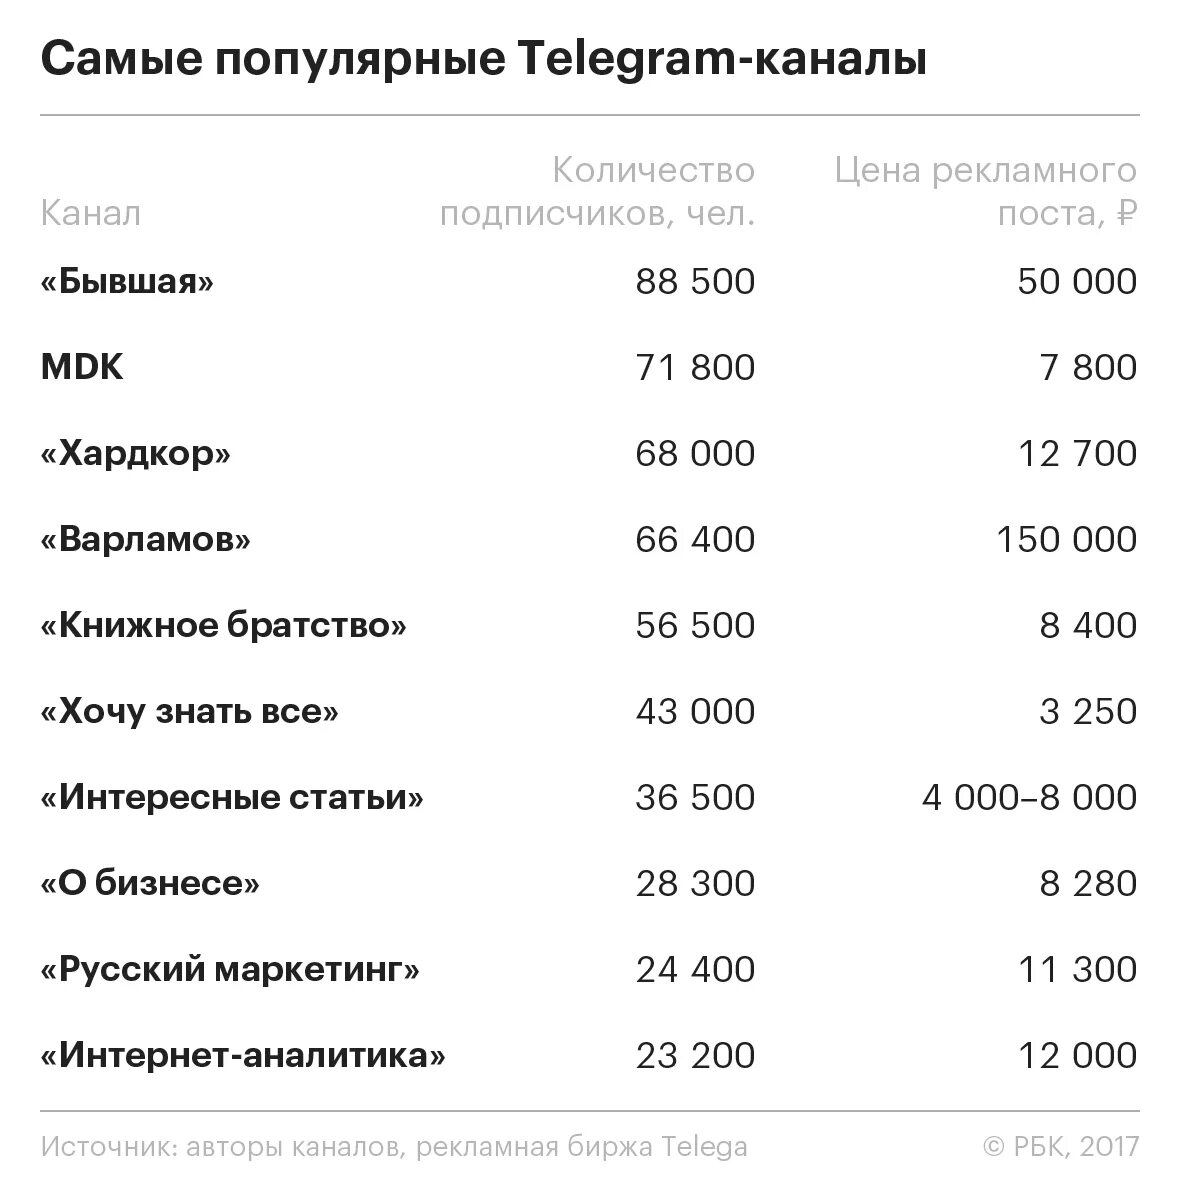 Тг канал вики. Самый популярный Telegram канал. Популярные телеграм каналы. Самые популярные телеграм каналы. Популярныемканалы телеграм.